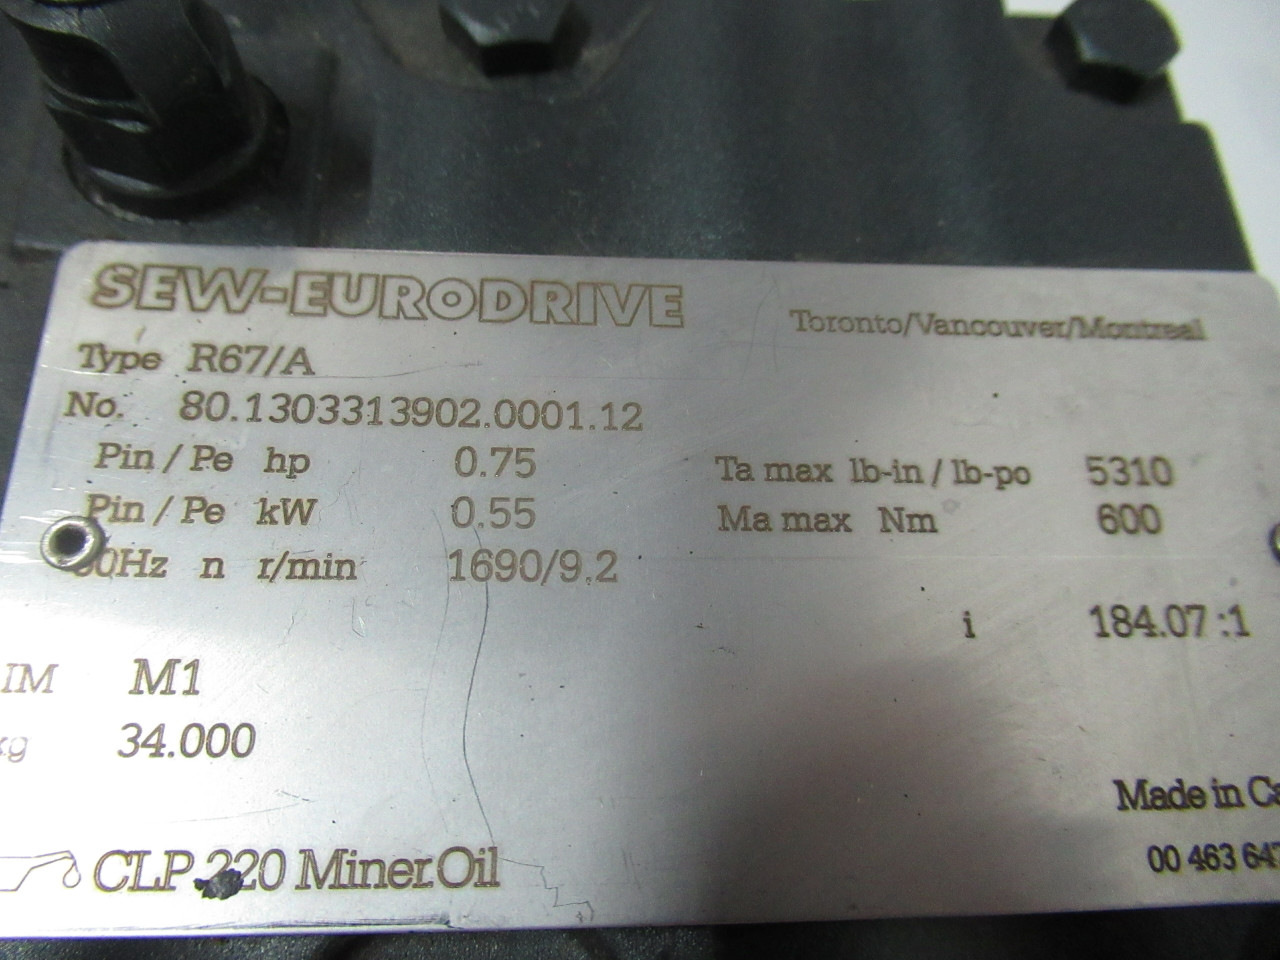 Sew-Eurodrive 0.75 HP 1690/9.2RPM C/W Gear Reducer 184.07:1 Ratio USED